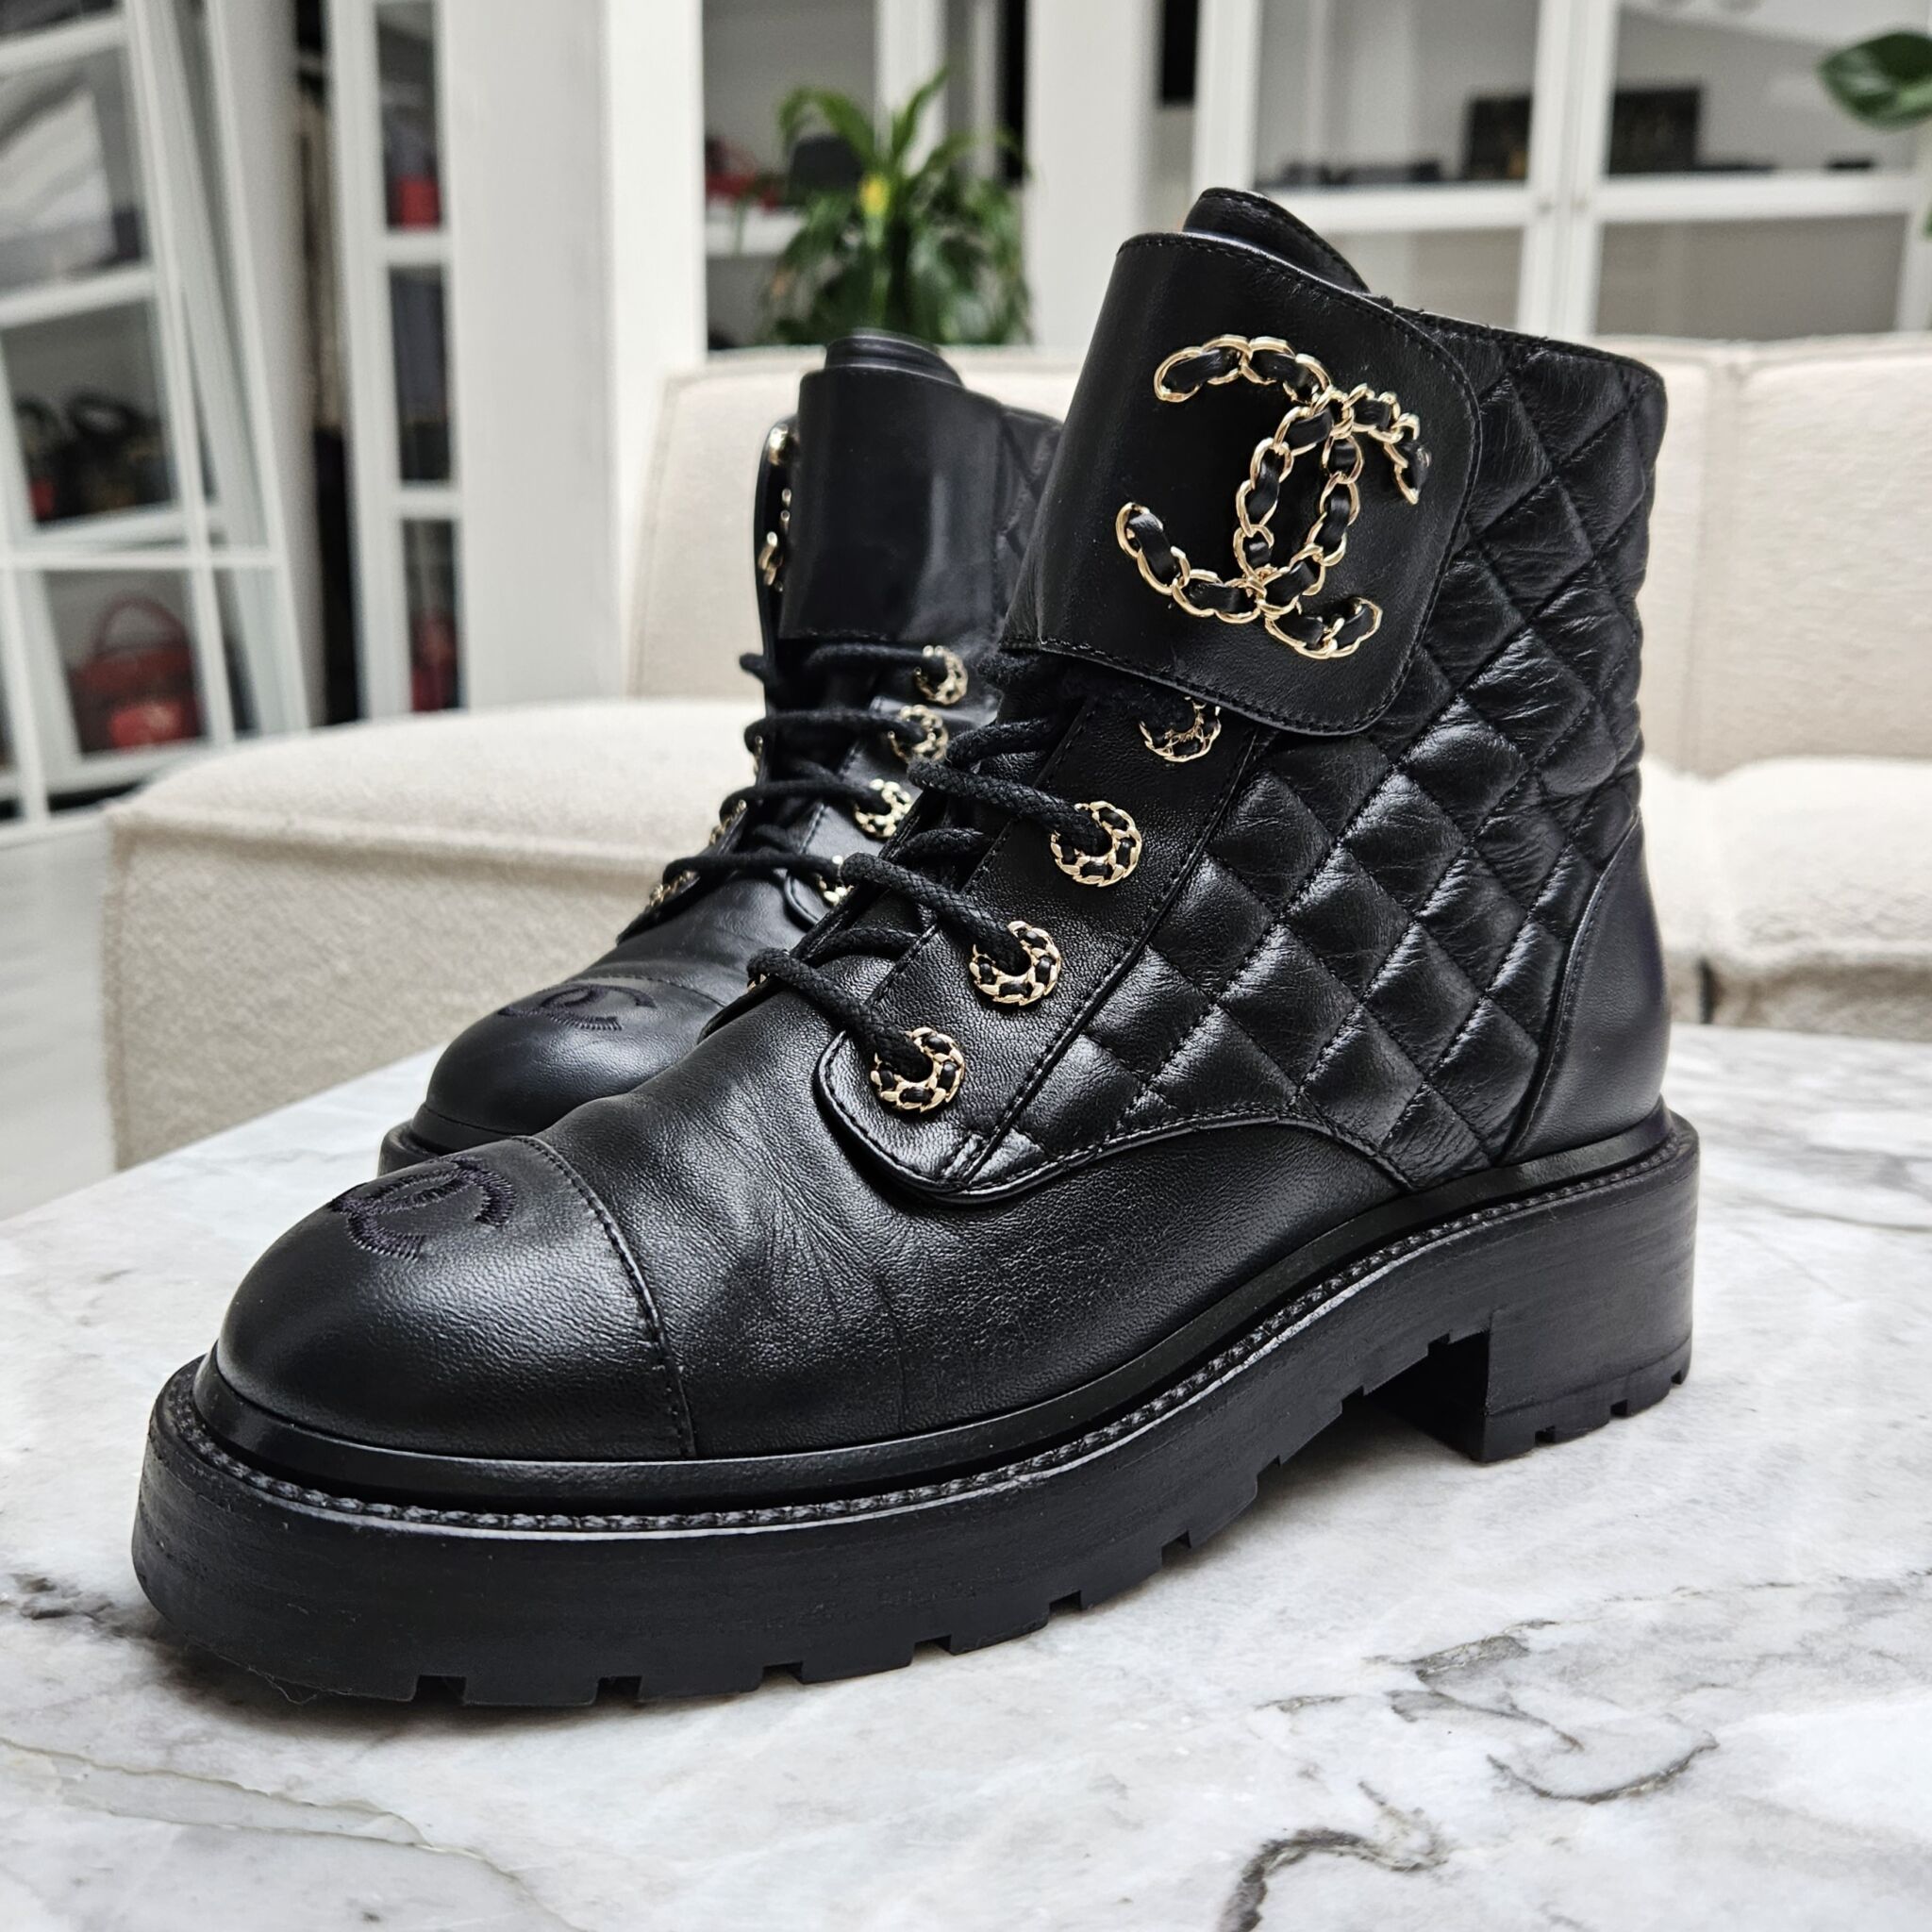 Chanel Combat Boots, Calfskin, Black GHW, 36.5 - Laulay Luxury